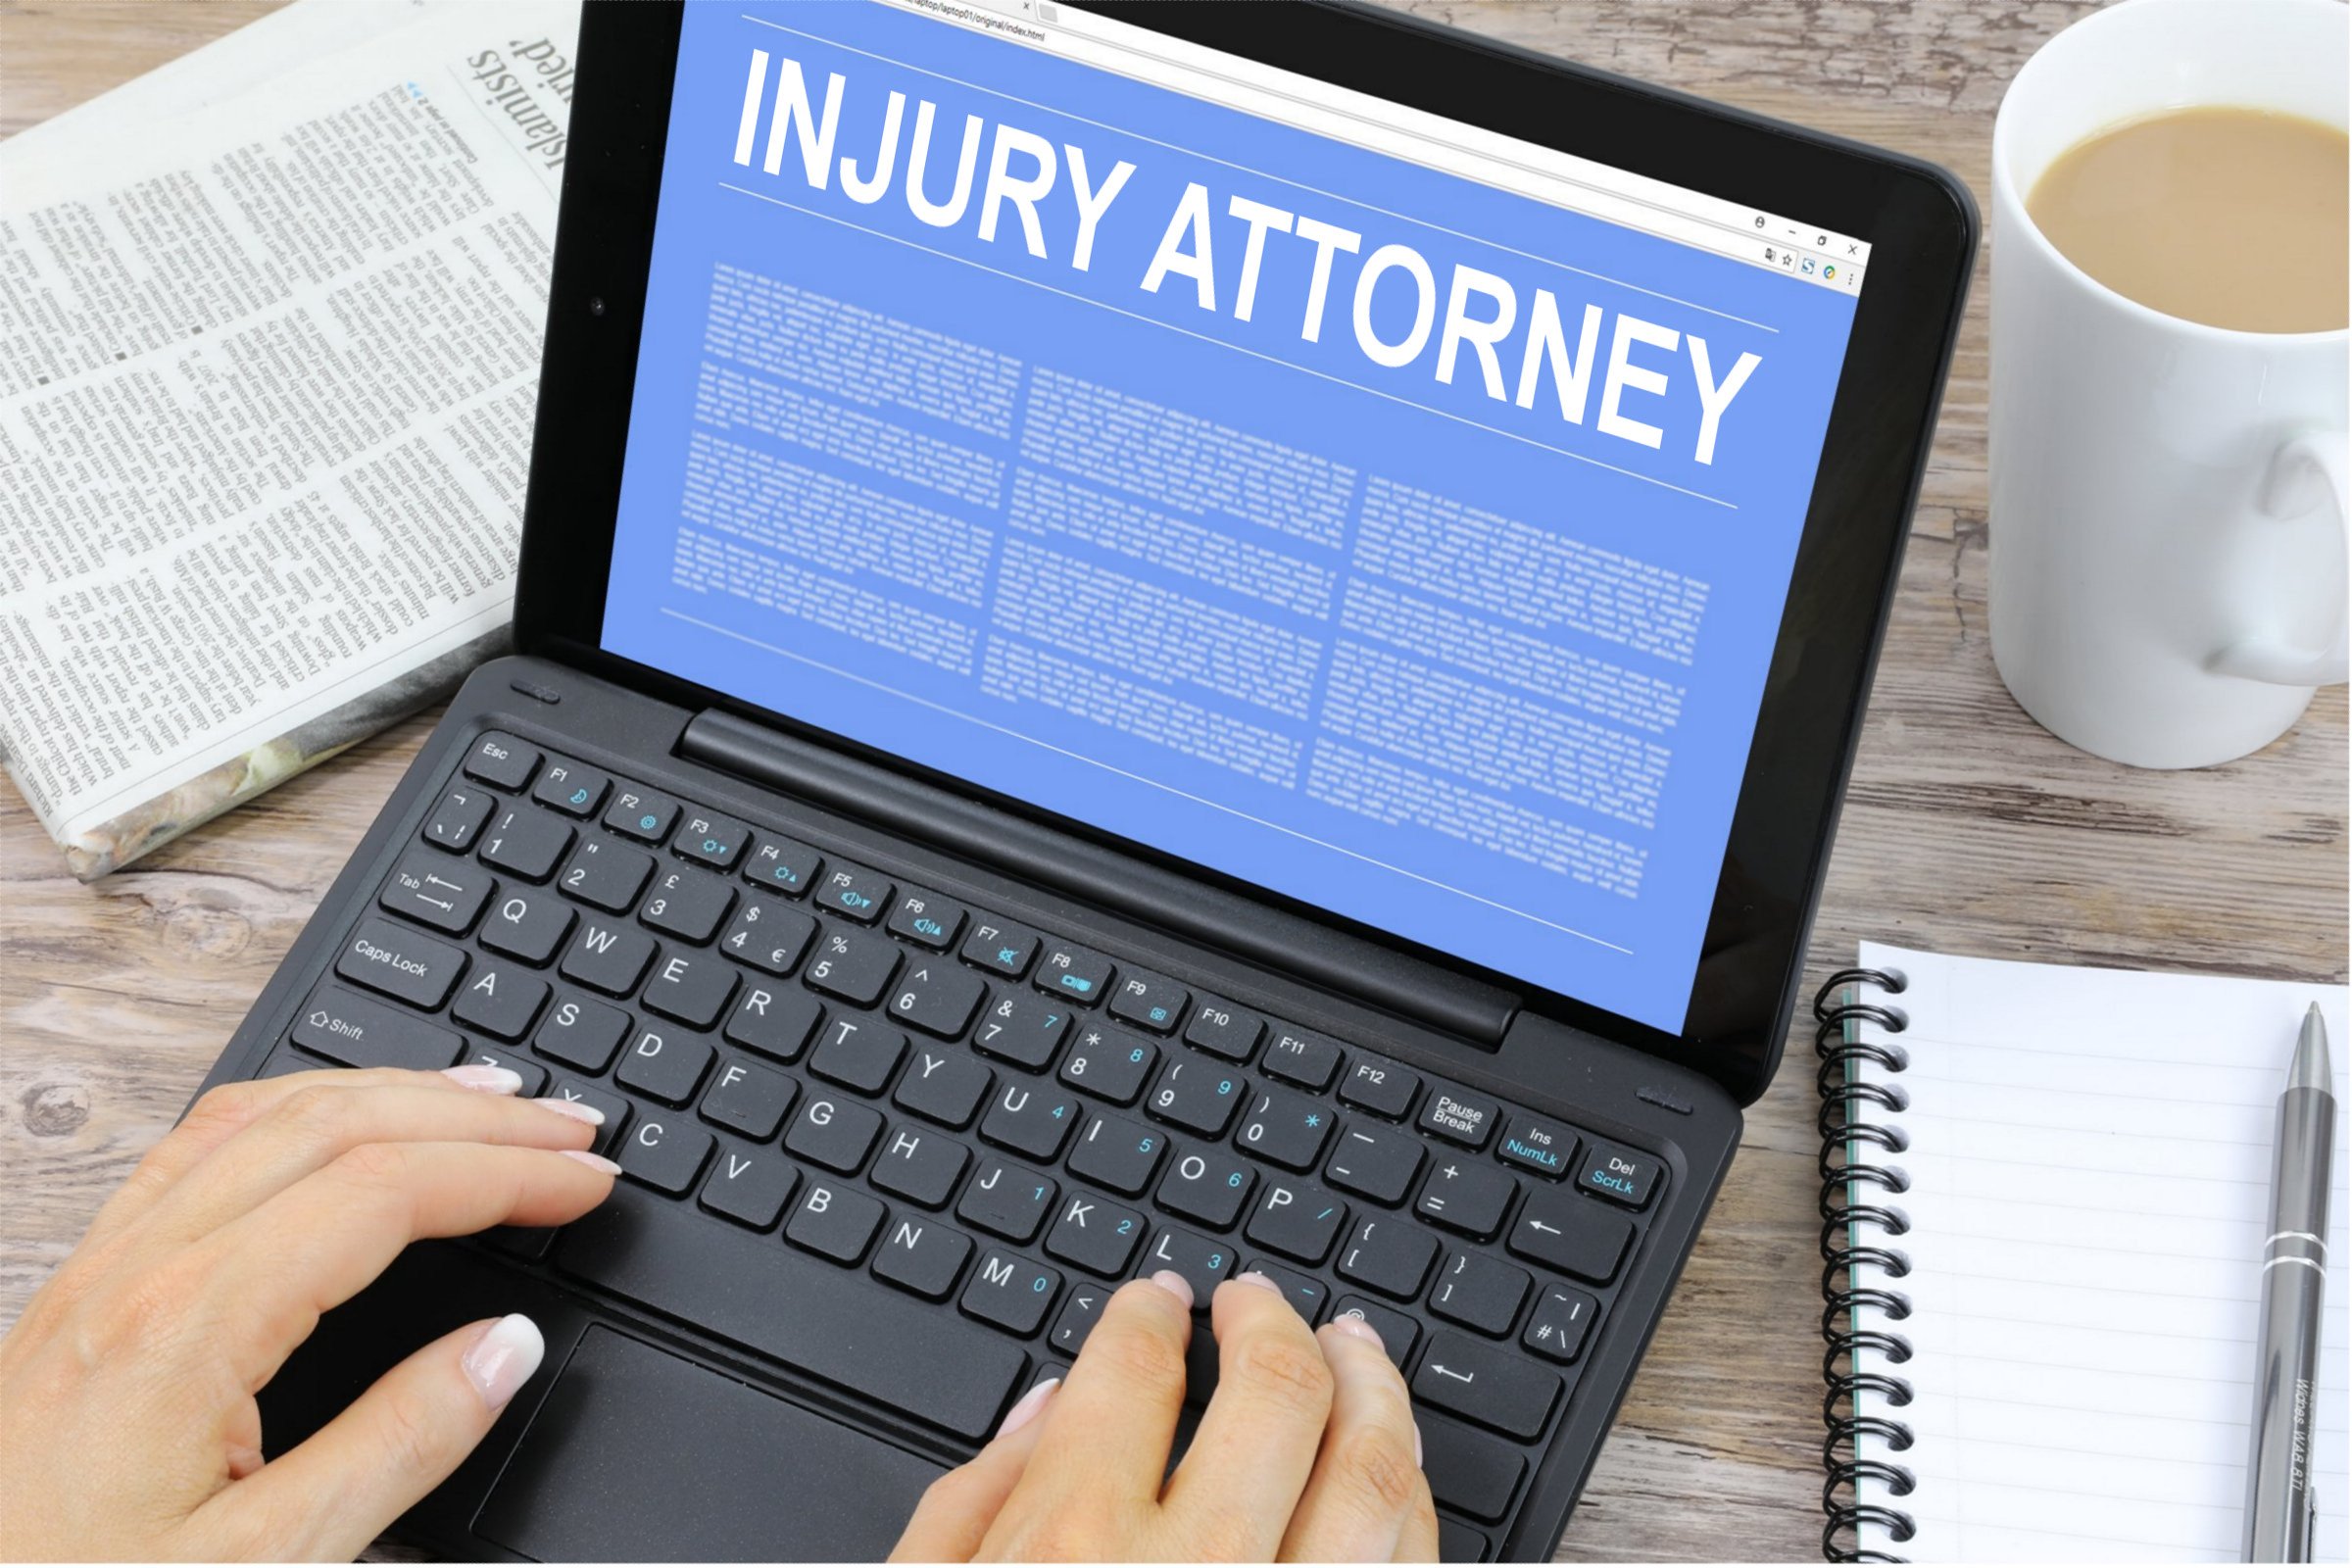 injury attorney